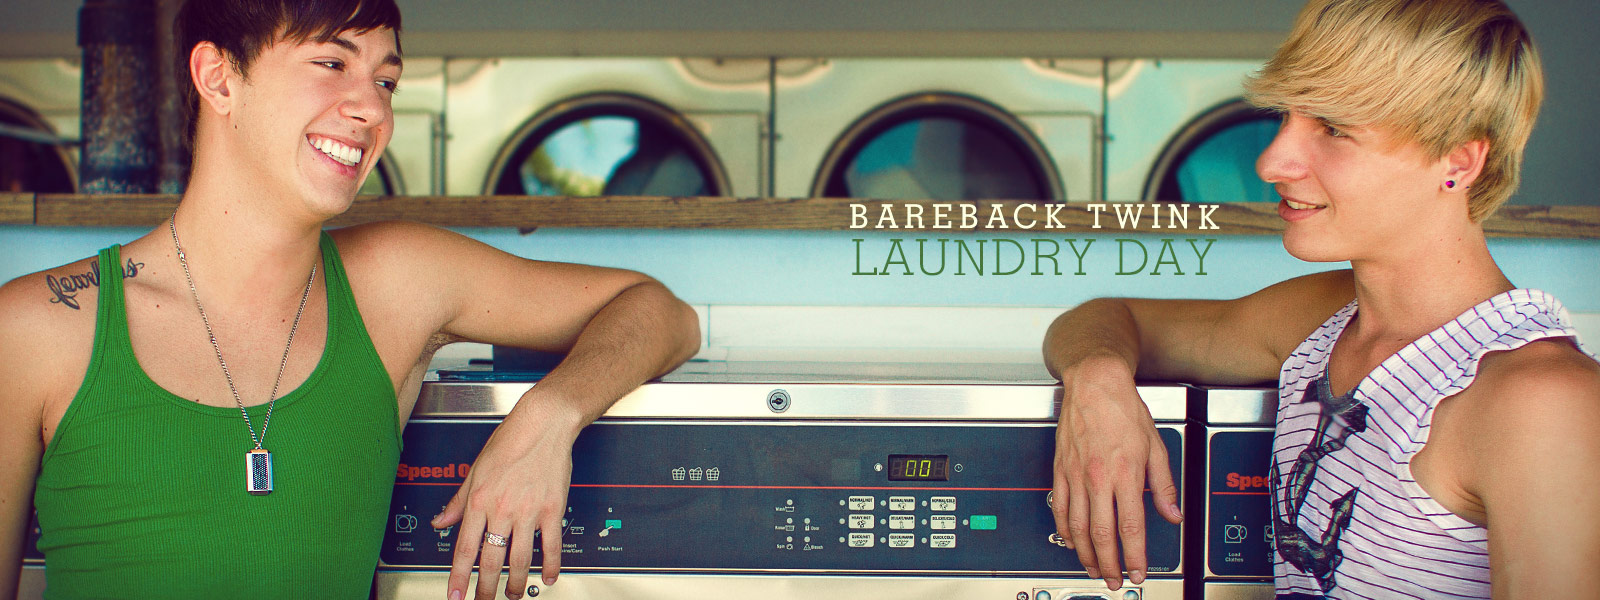 Bareback Twink Laundry Day